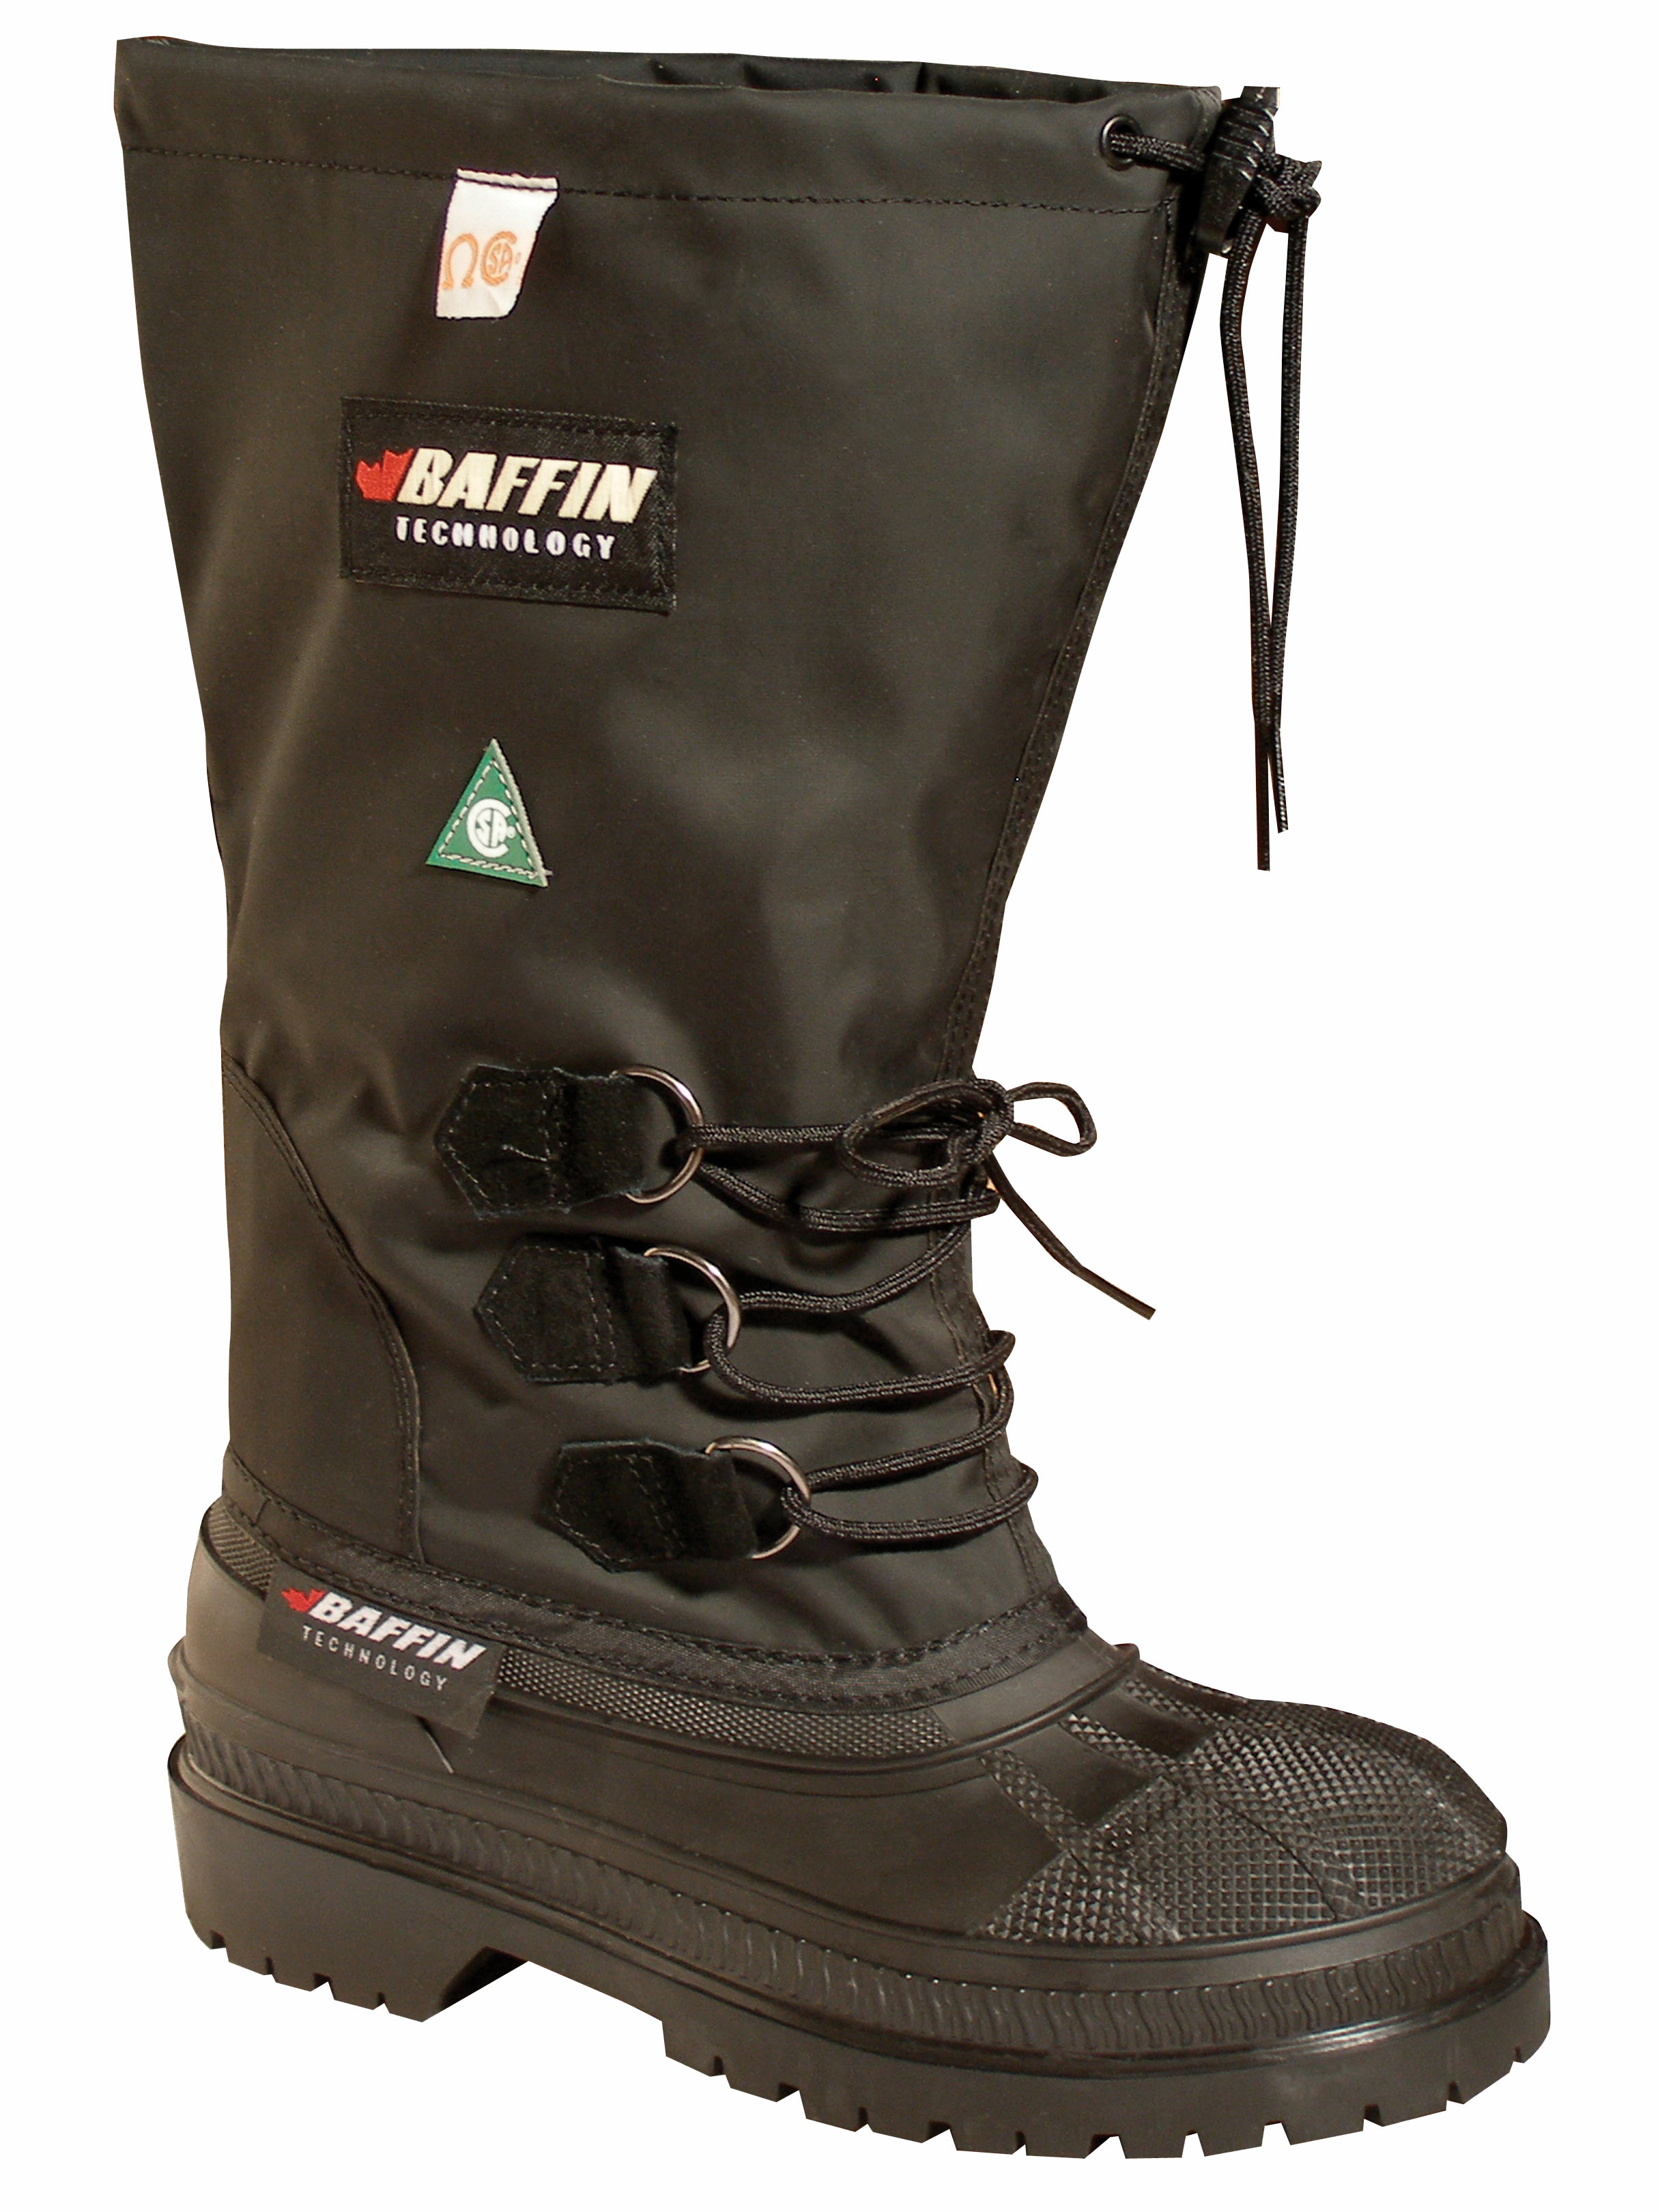 baffin oilrig boots